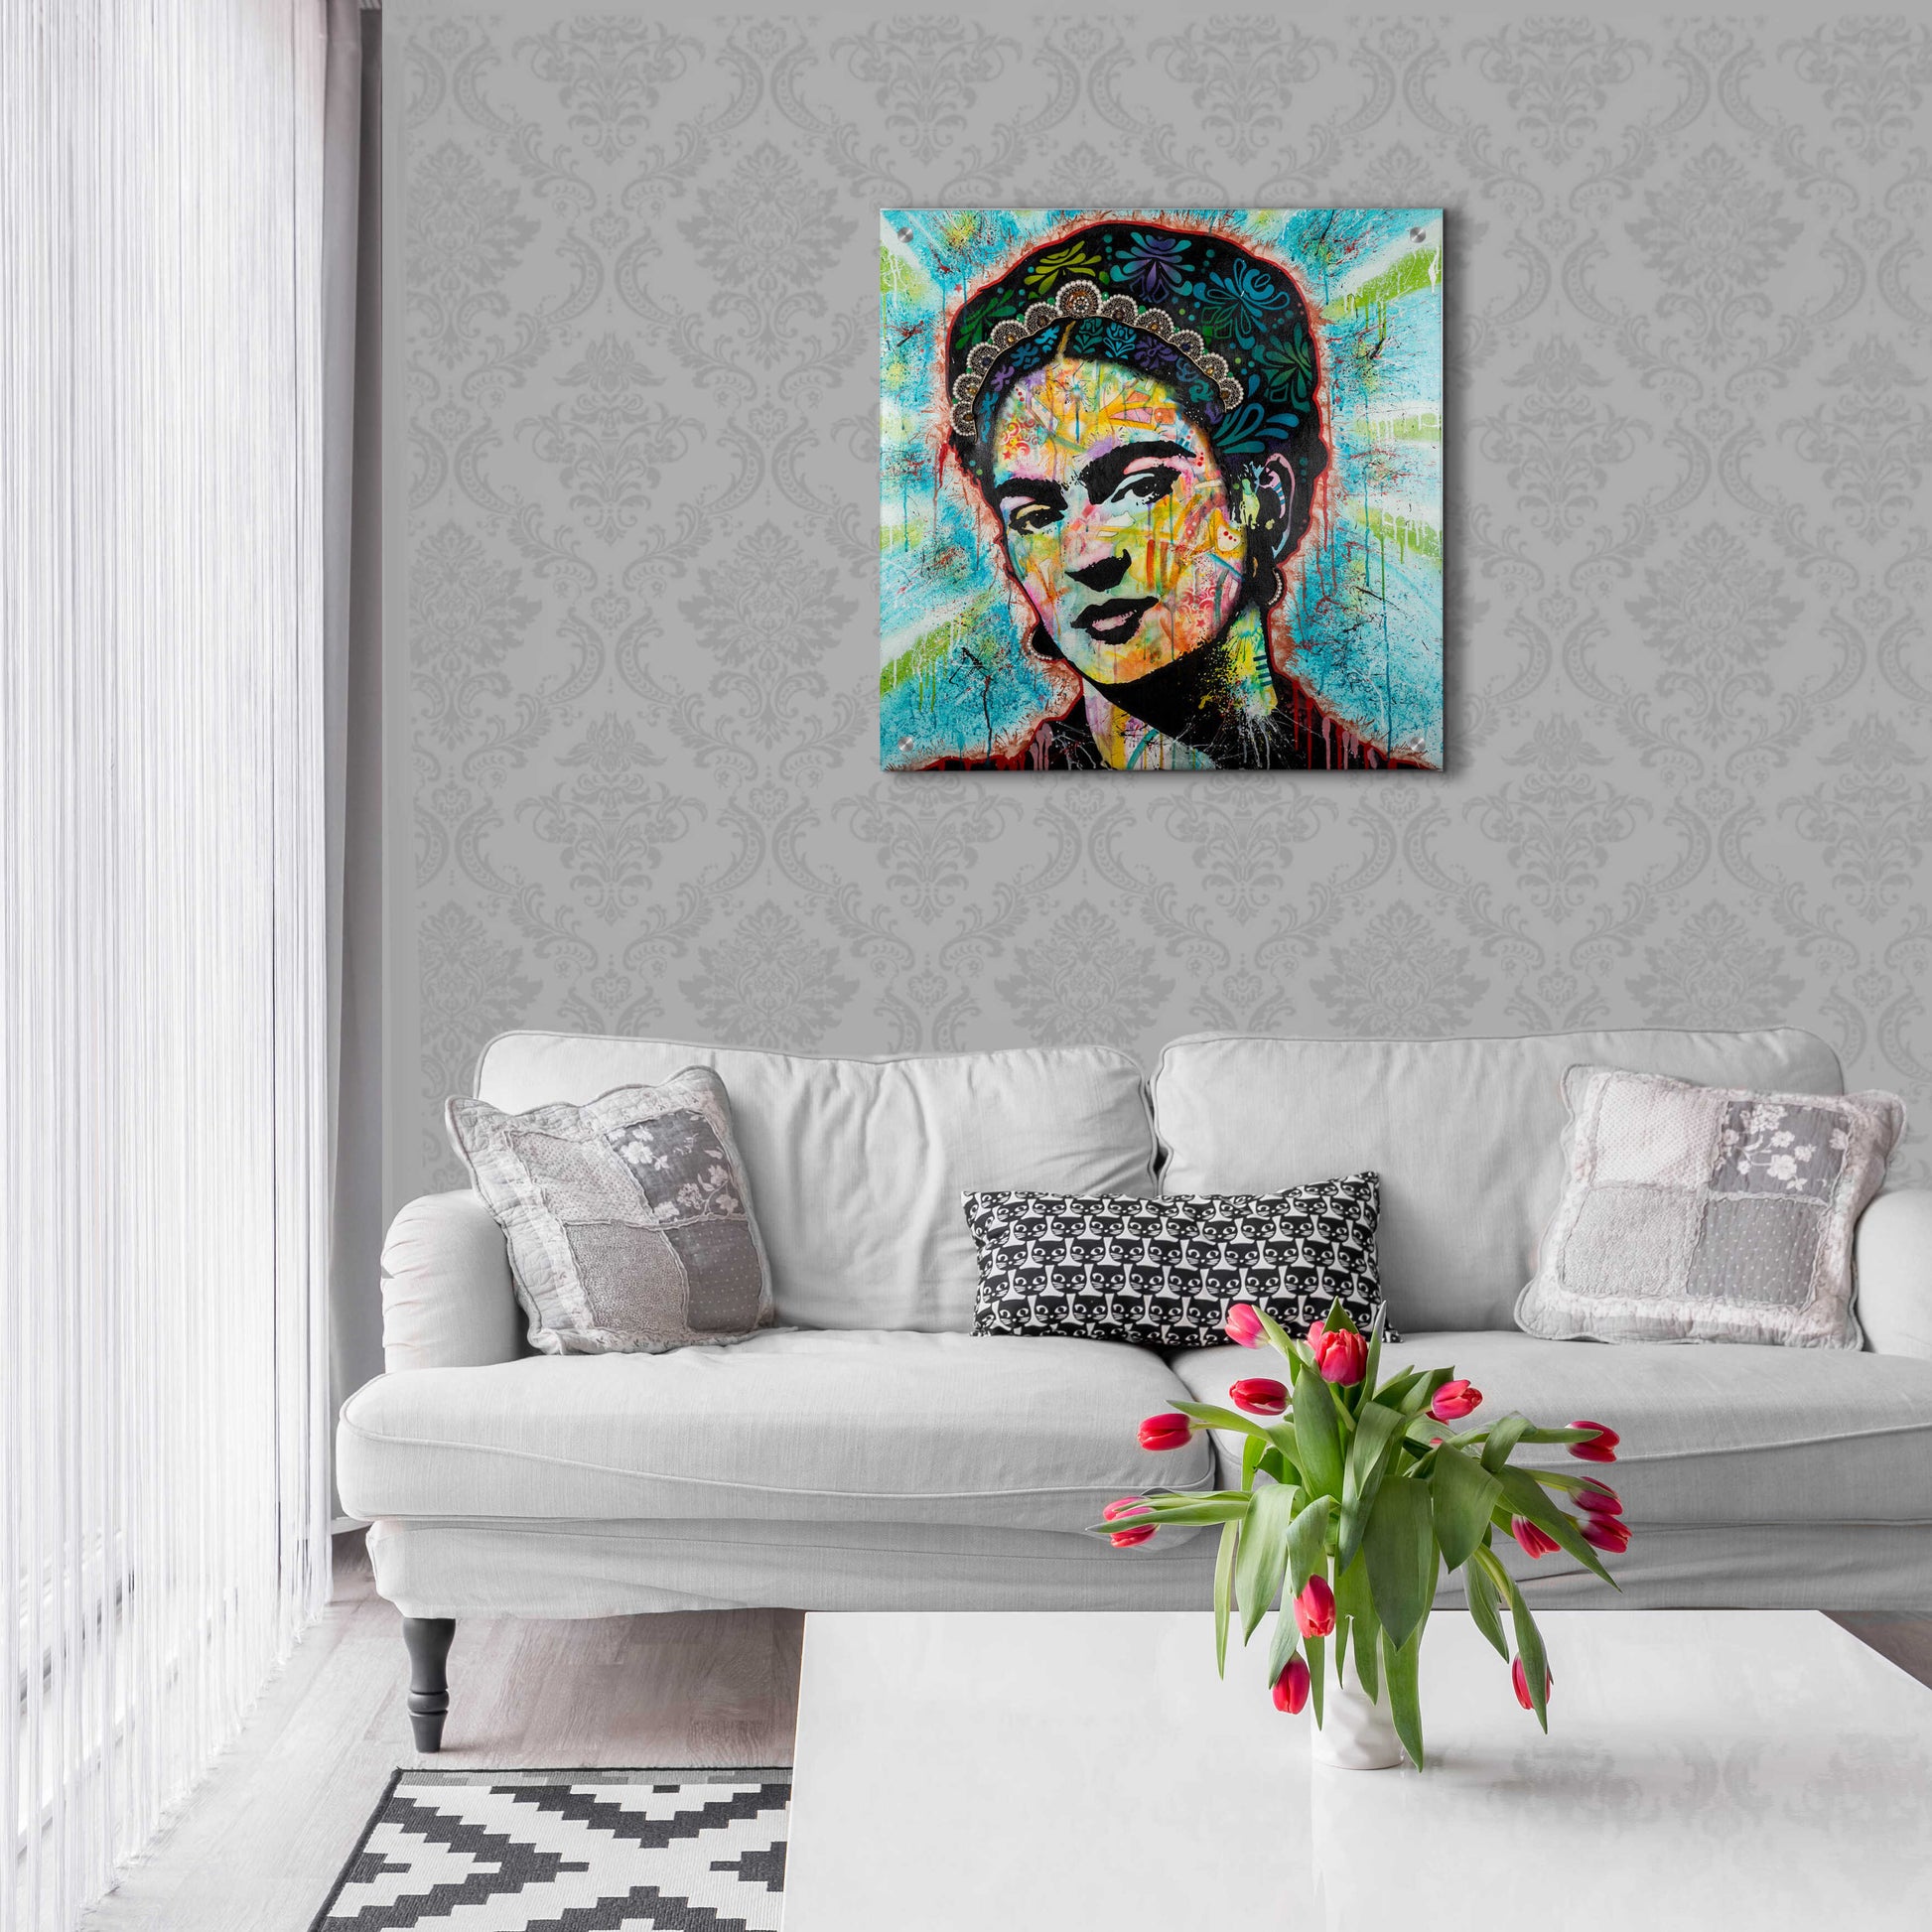 Epic Art 'Frida' by Dean Russo, Acrylic Glass Wall Art,24x24